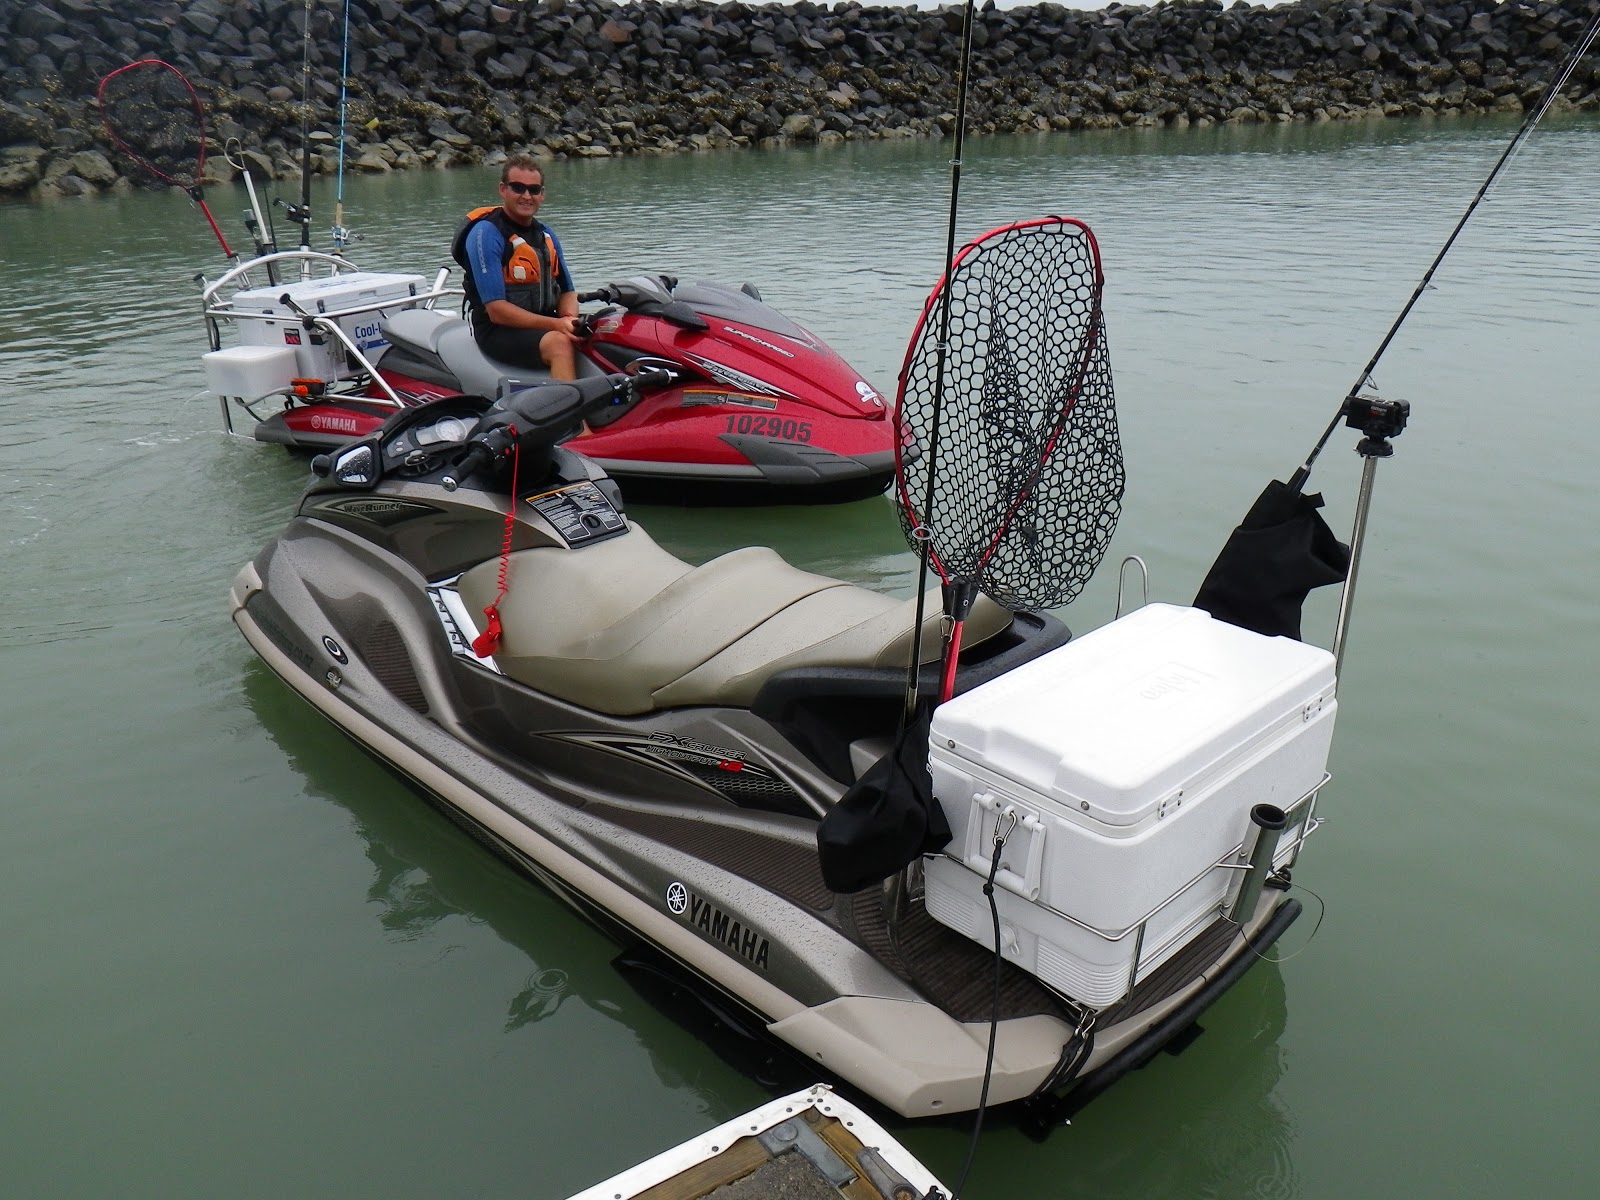 Jet ski fishing Blog: Report 051 Extreme Jetskifishing to catch